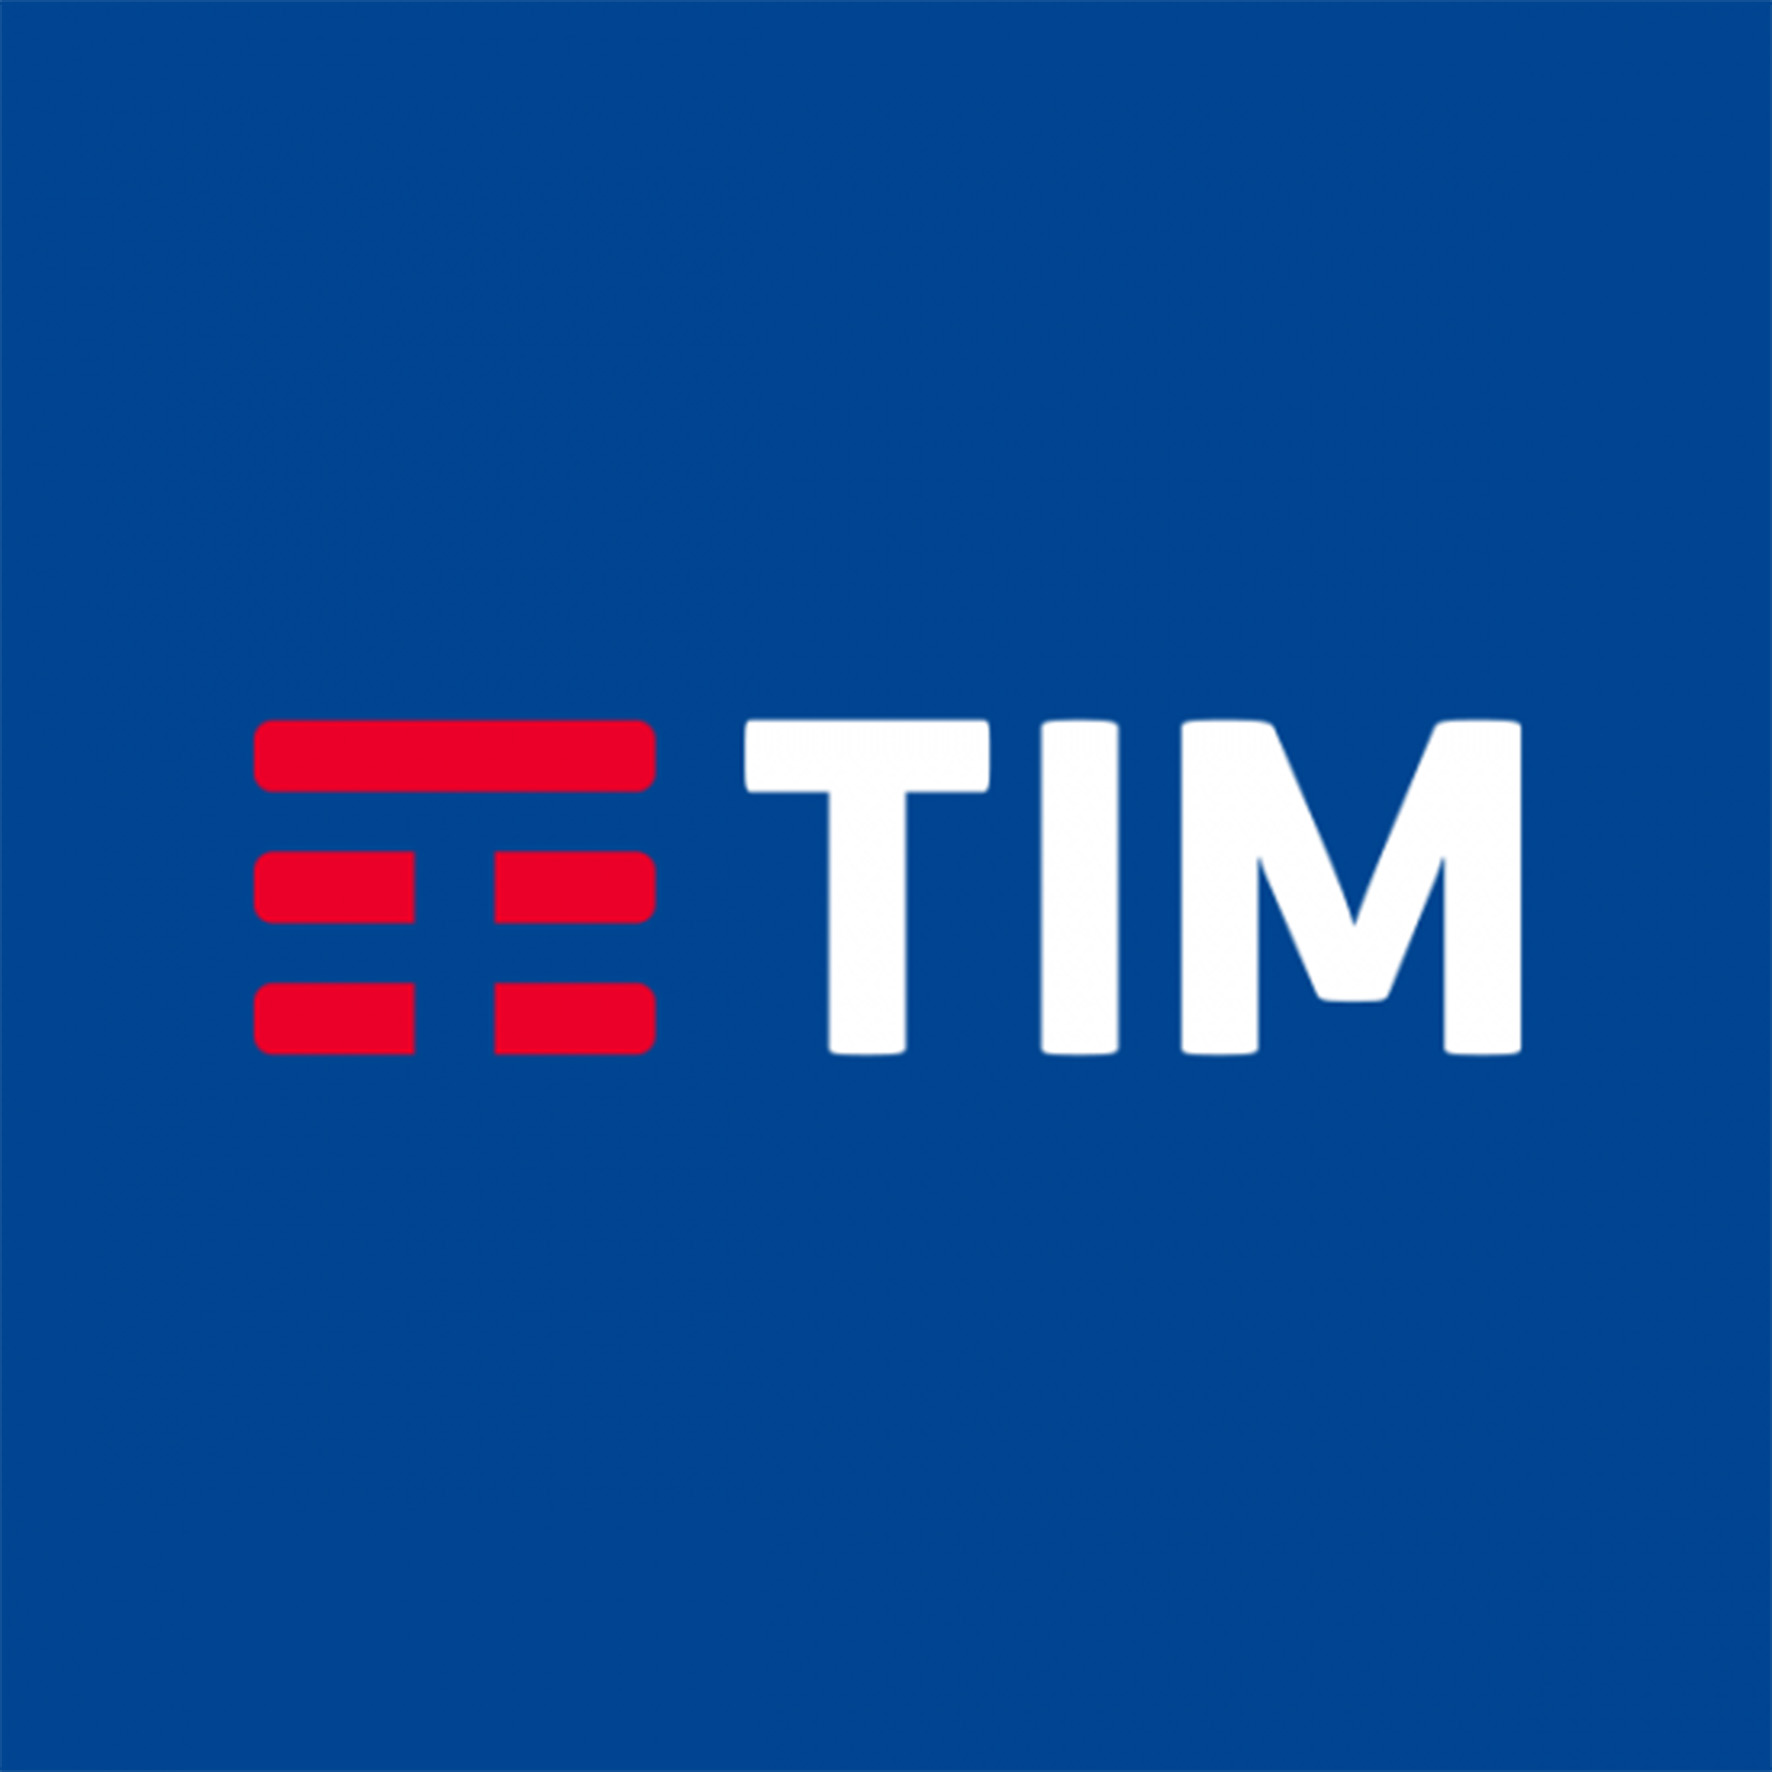 Il nuovo logo TIM © TIM/TelecomItalia/Interbrand